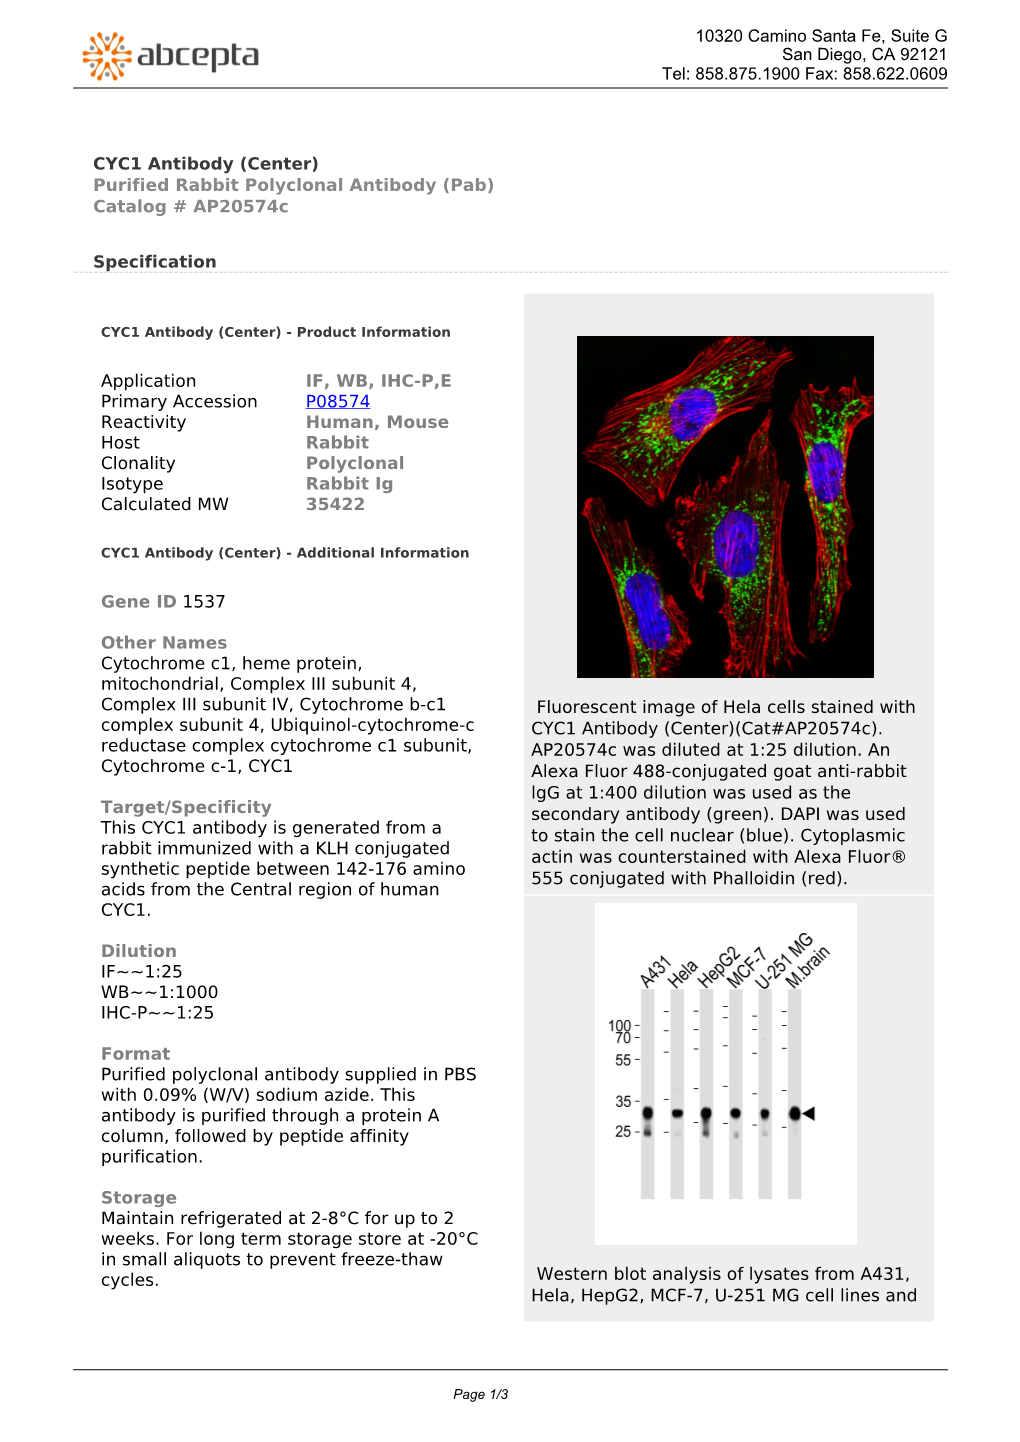 CYC1 Antibody (Center) Purified Rabbit Polyclonal Antibody (Pab) Catalog # Ap20574c